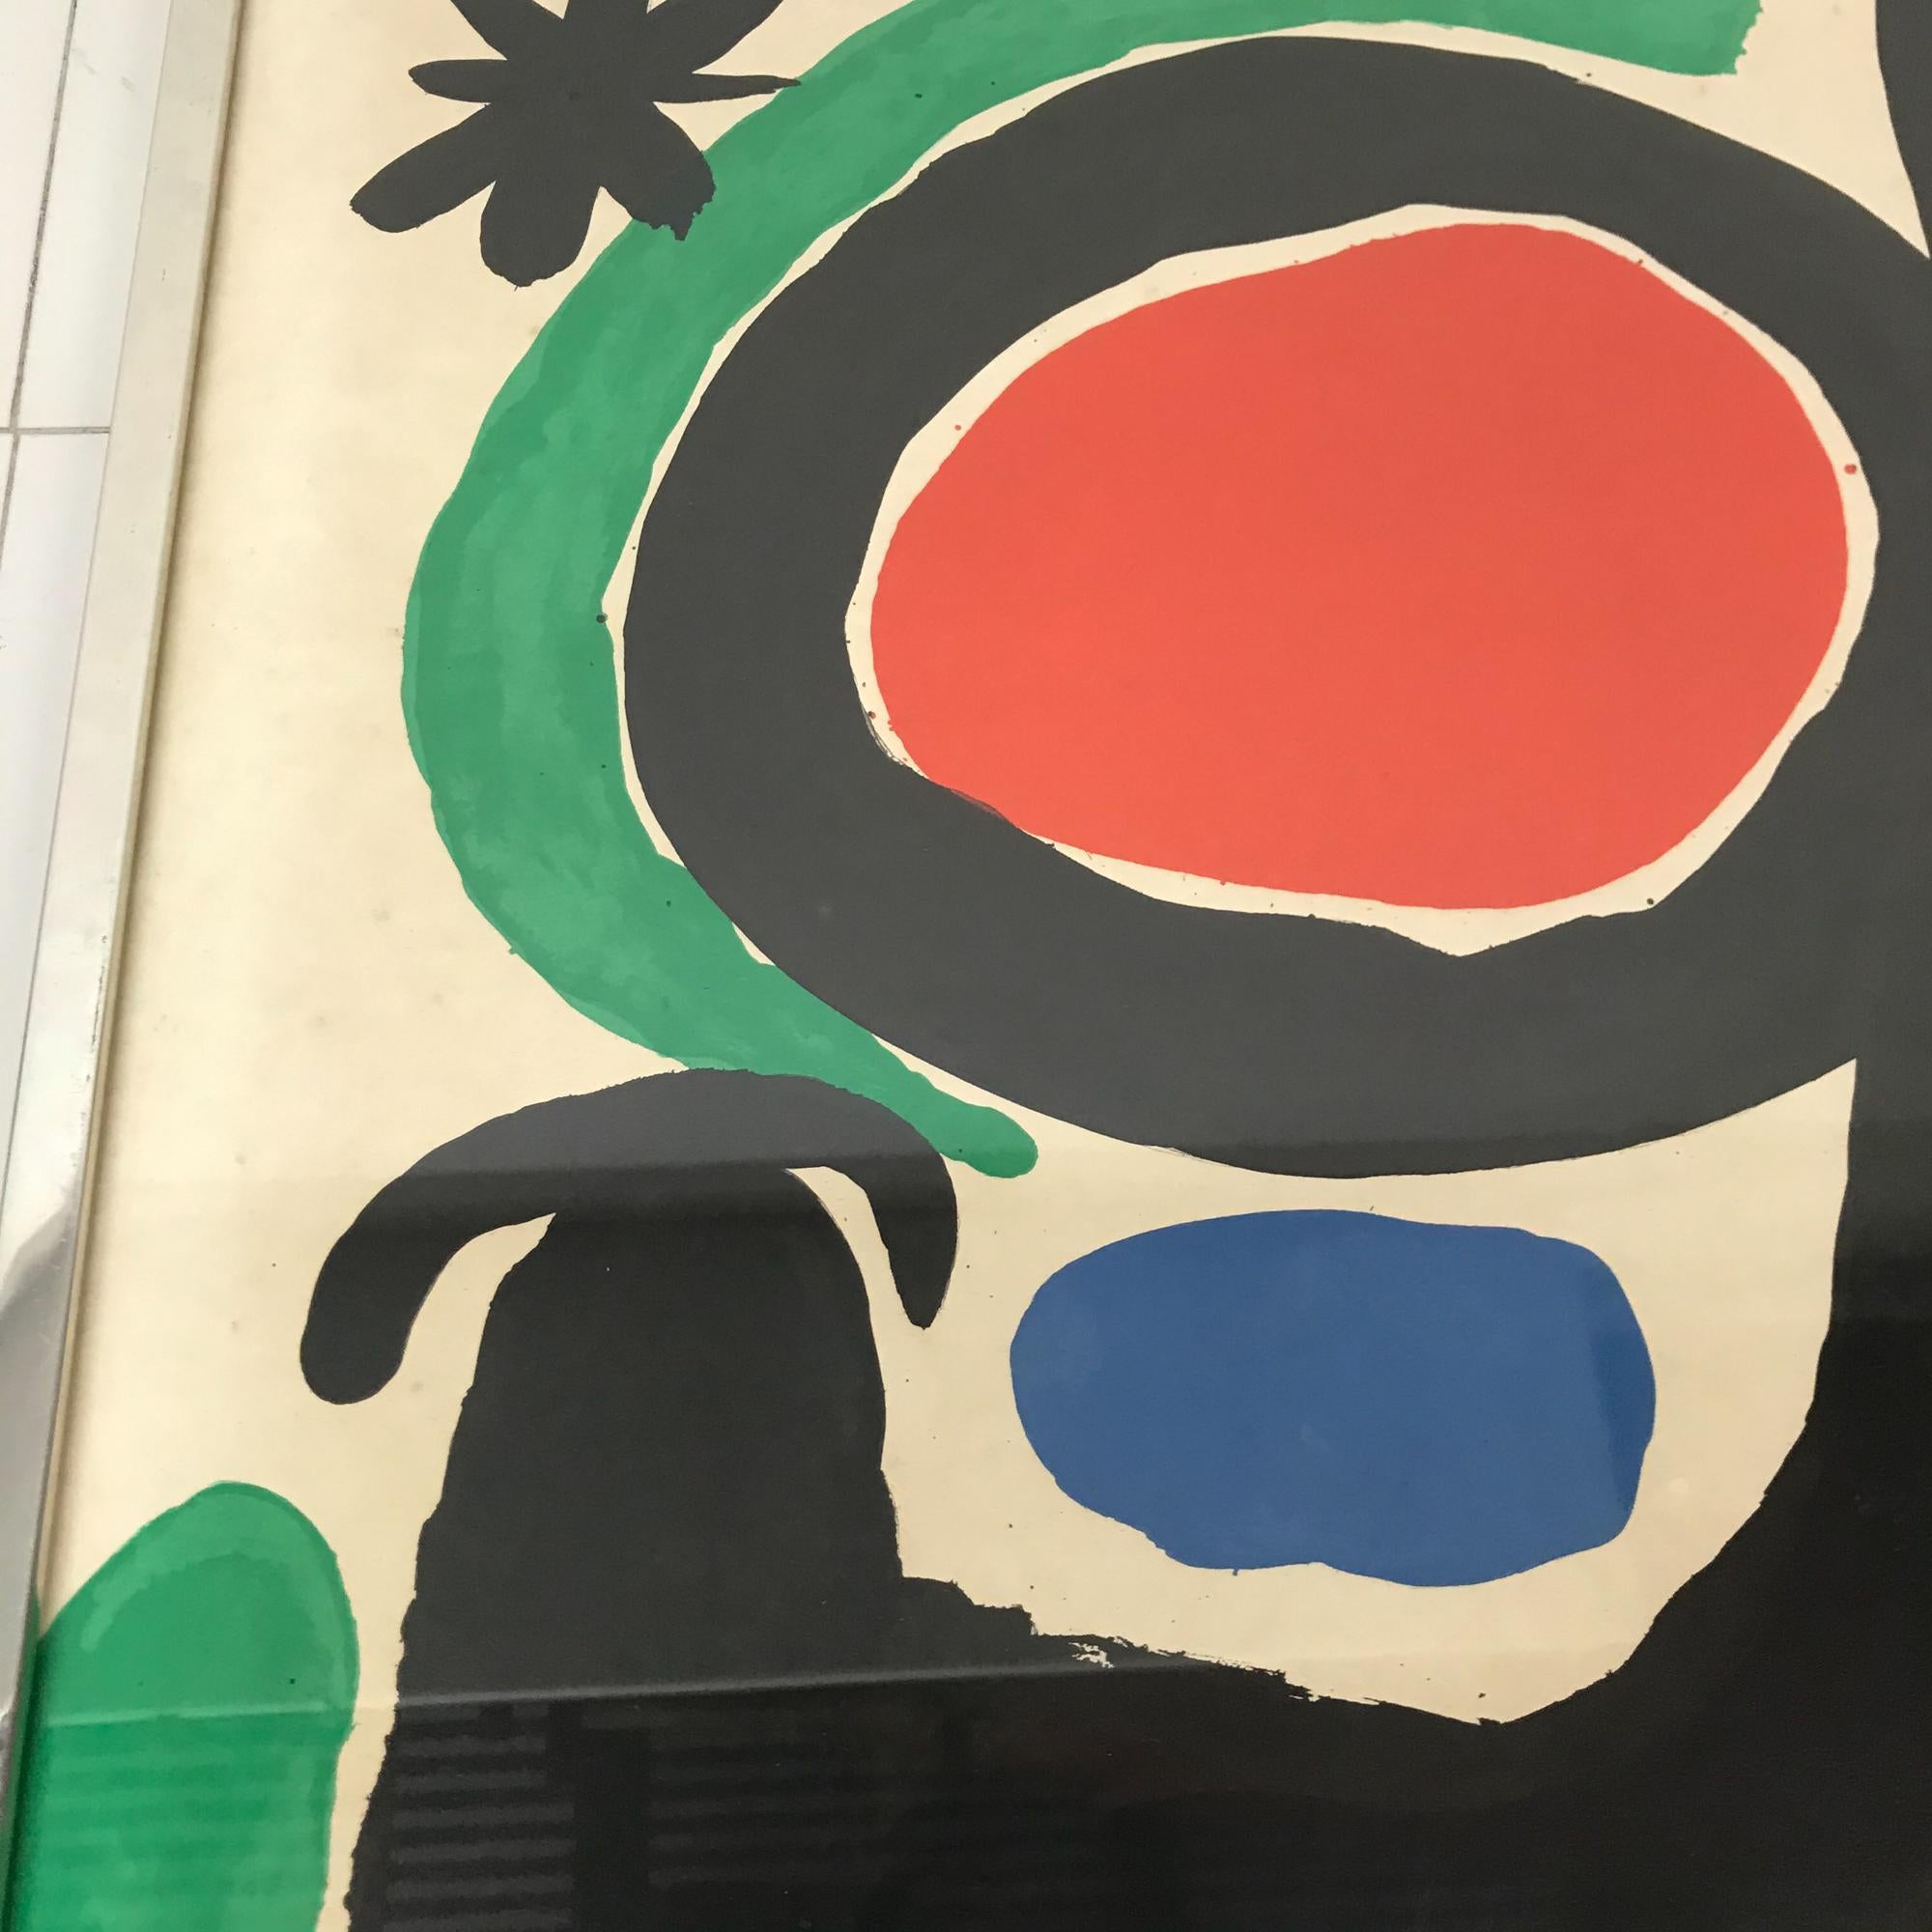 Mid-Century Modern Fondation Maeght Joan Miro Abstract Poster, 1968, Paris, France